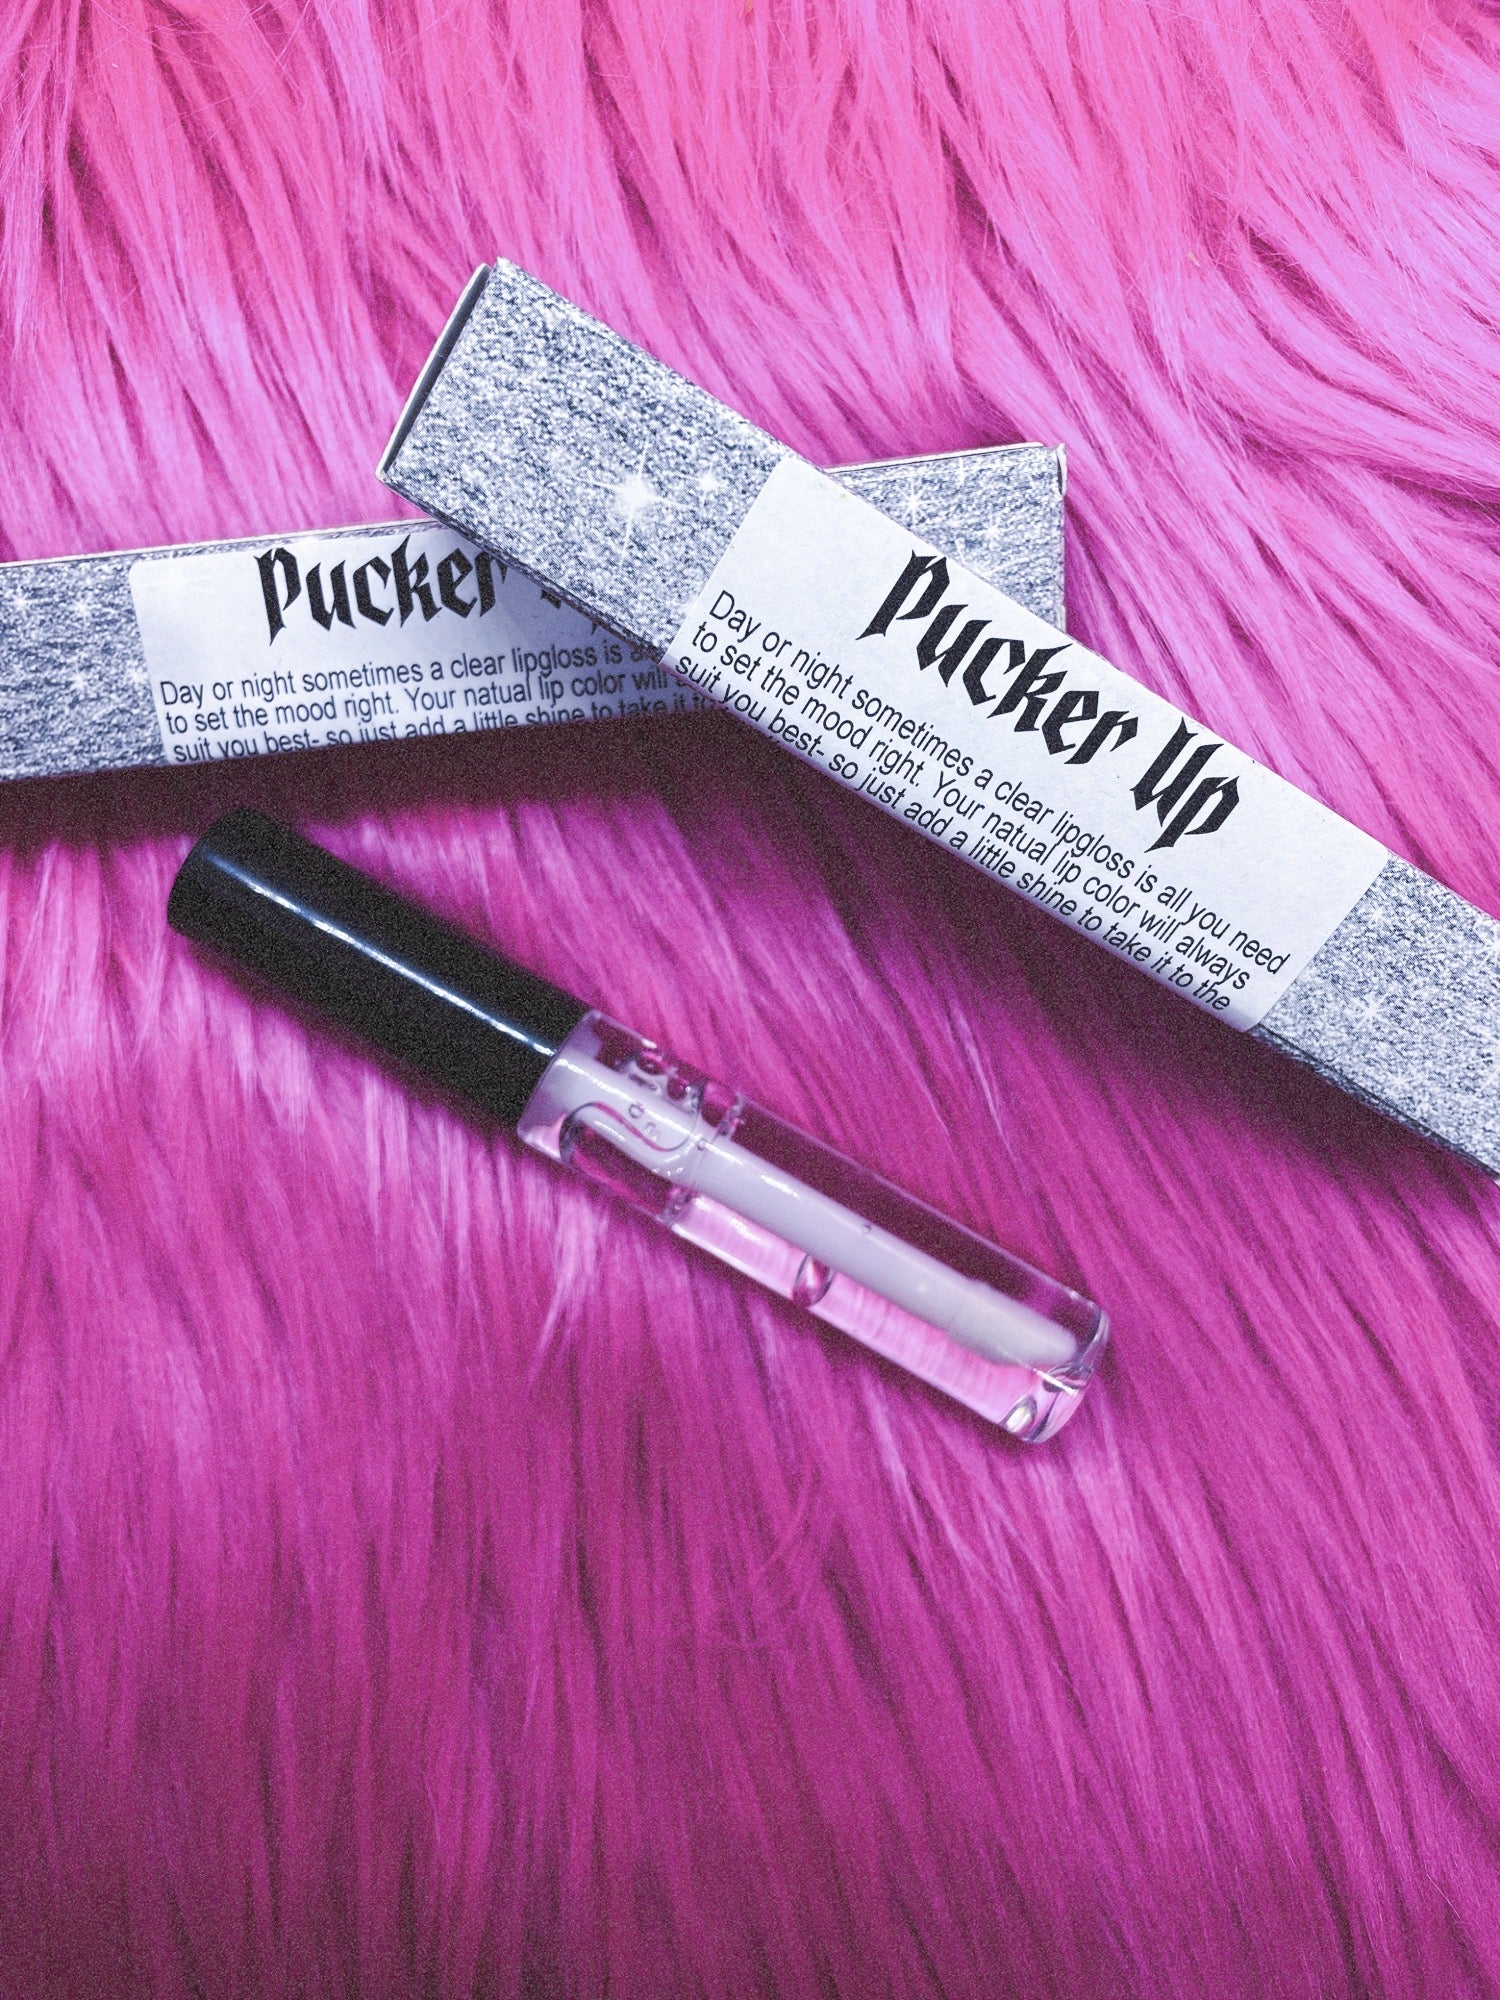 Pucker up